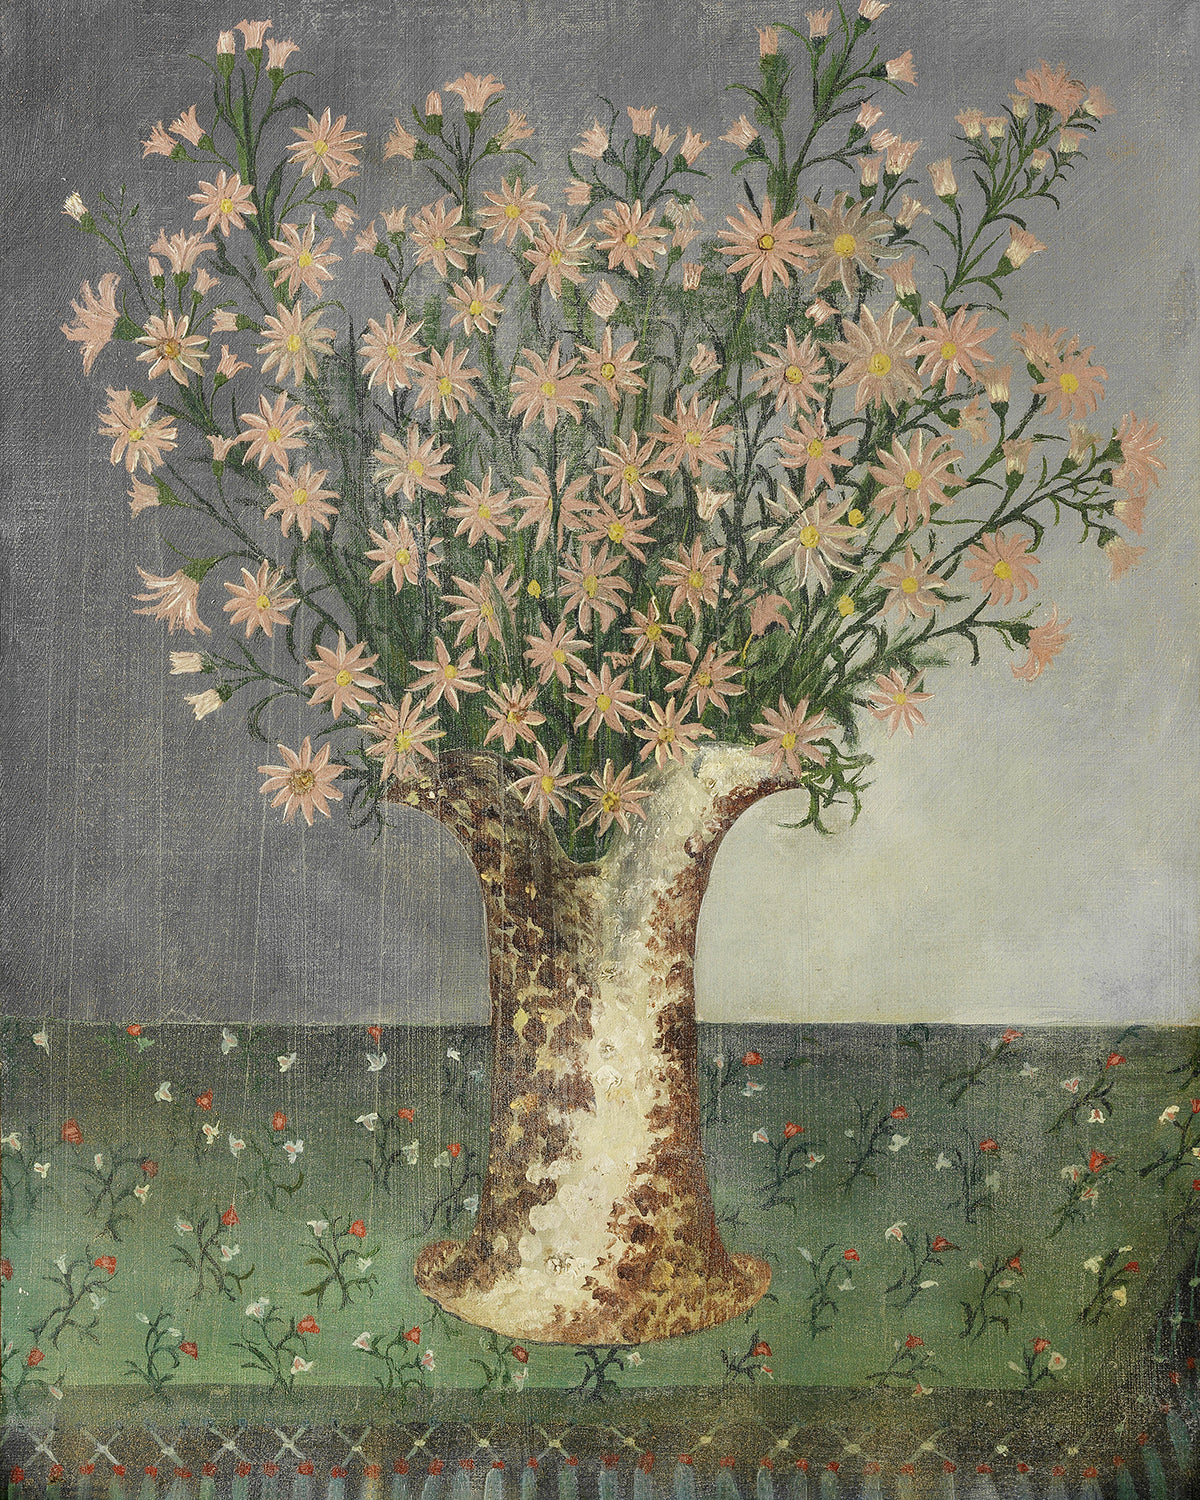 Vase of Flowers on a Fringed Carpet by Henri Rousseau